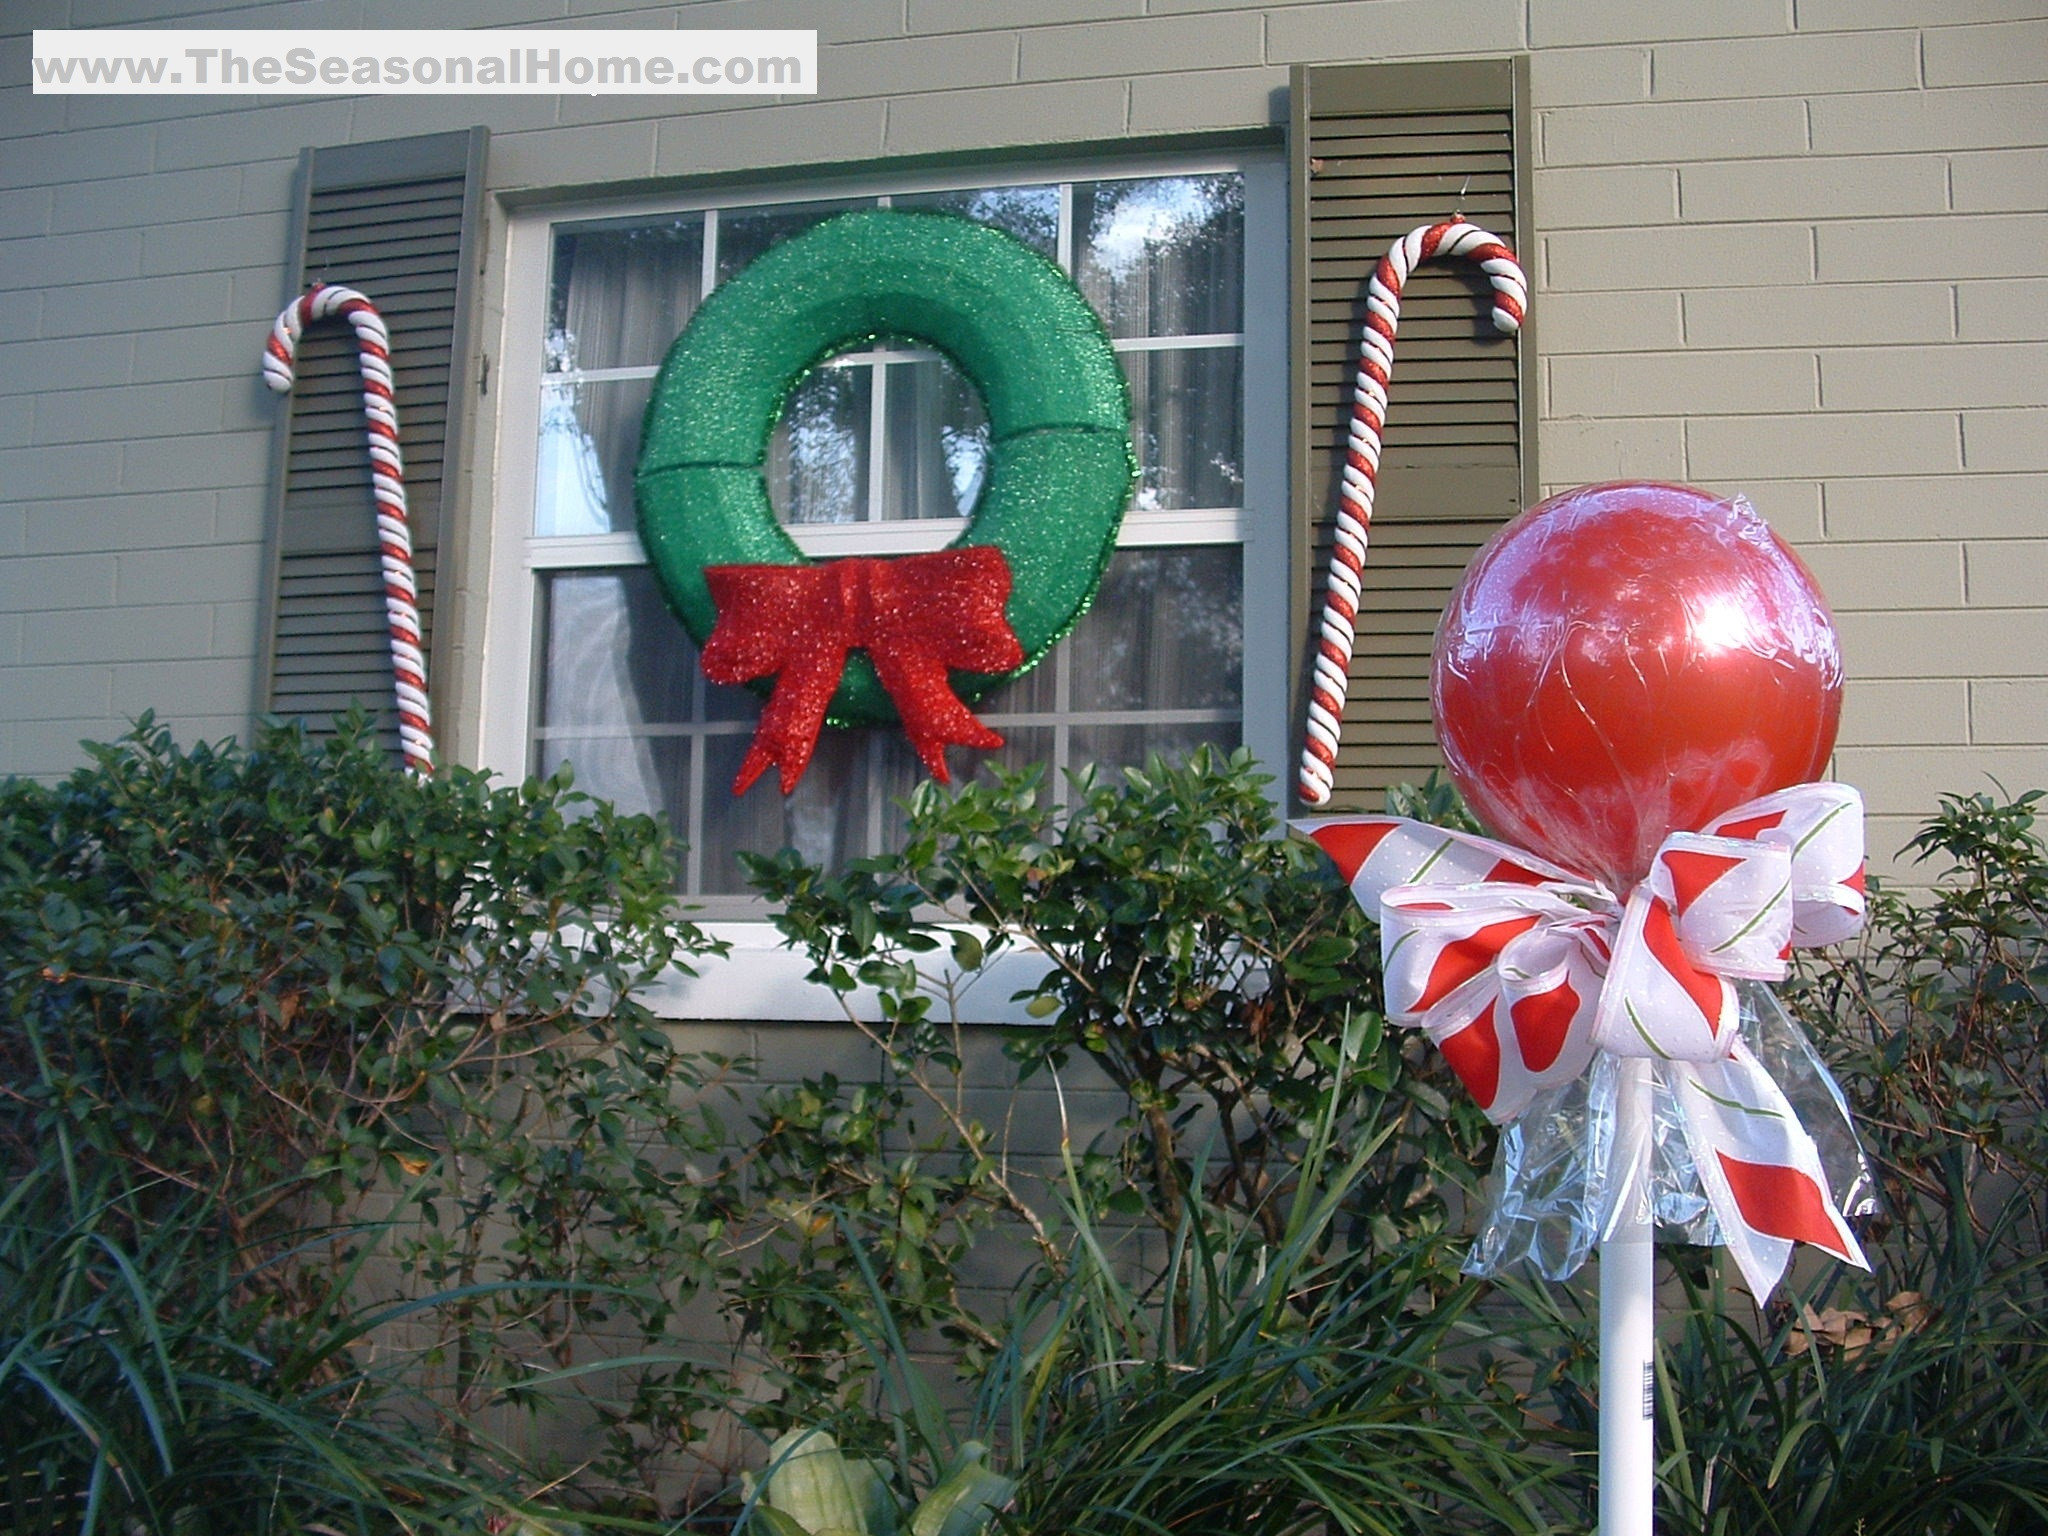 DIY Christmas Yard Decor
 Outdoor “CANDY” A Christmas Decorating Idea The